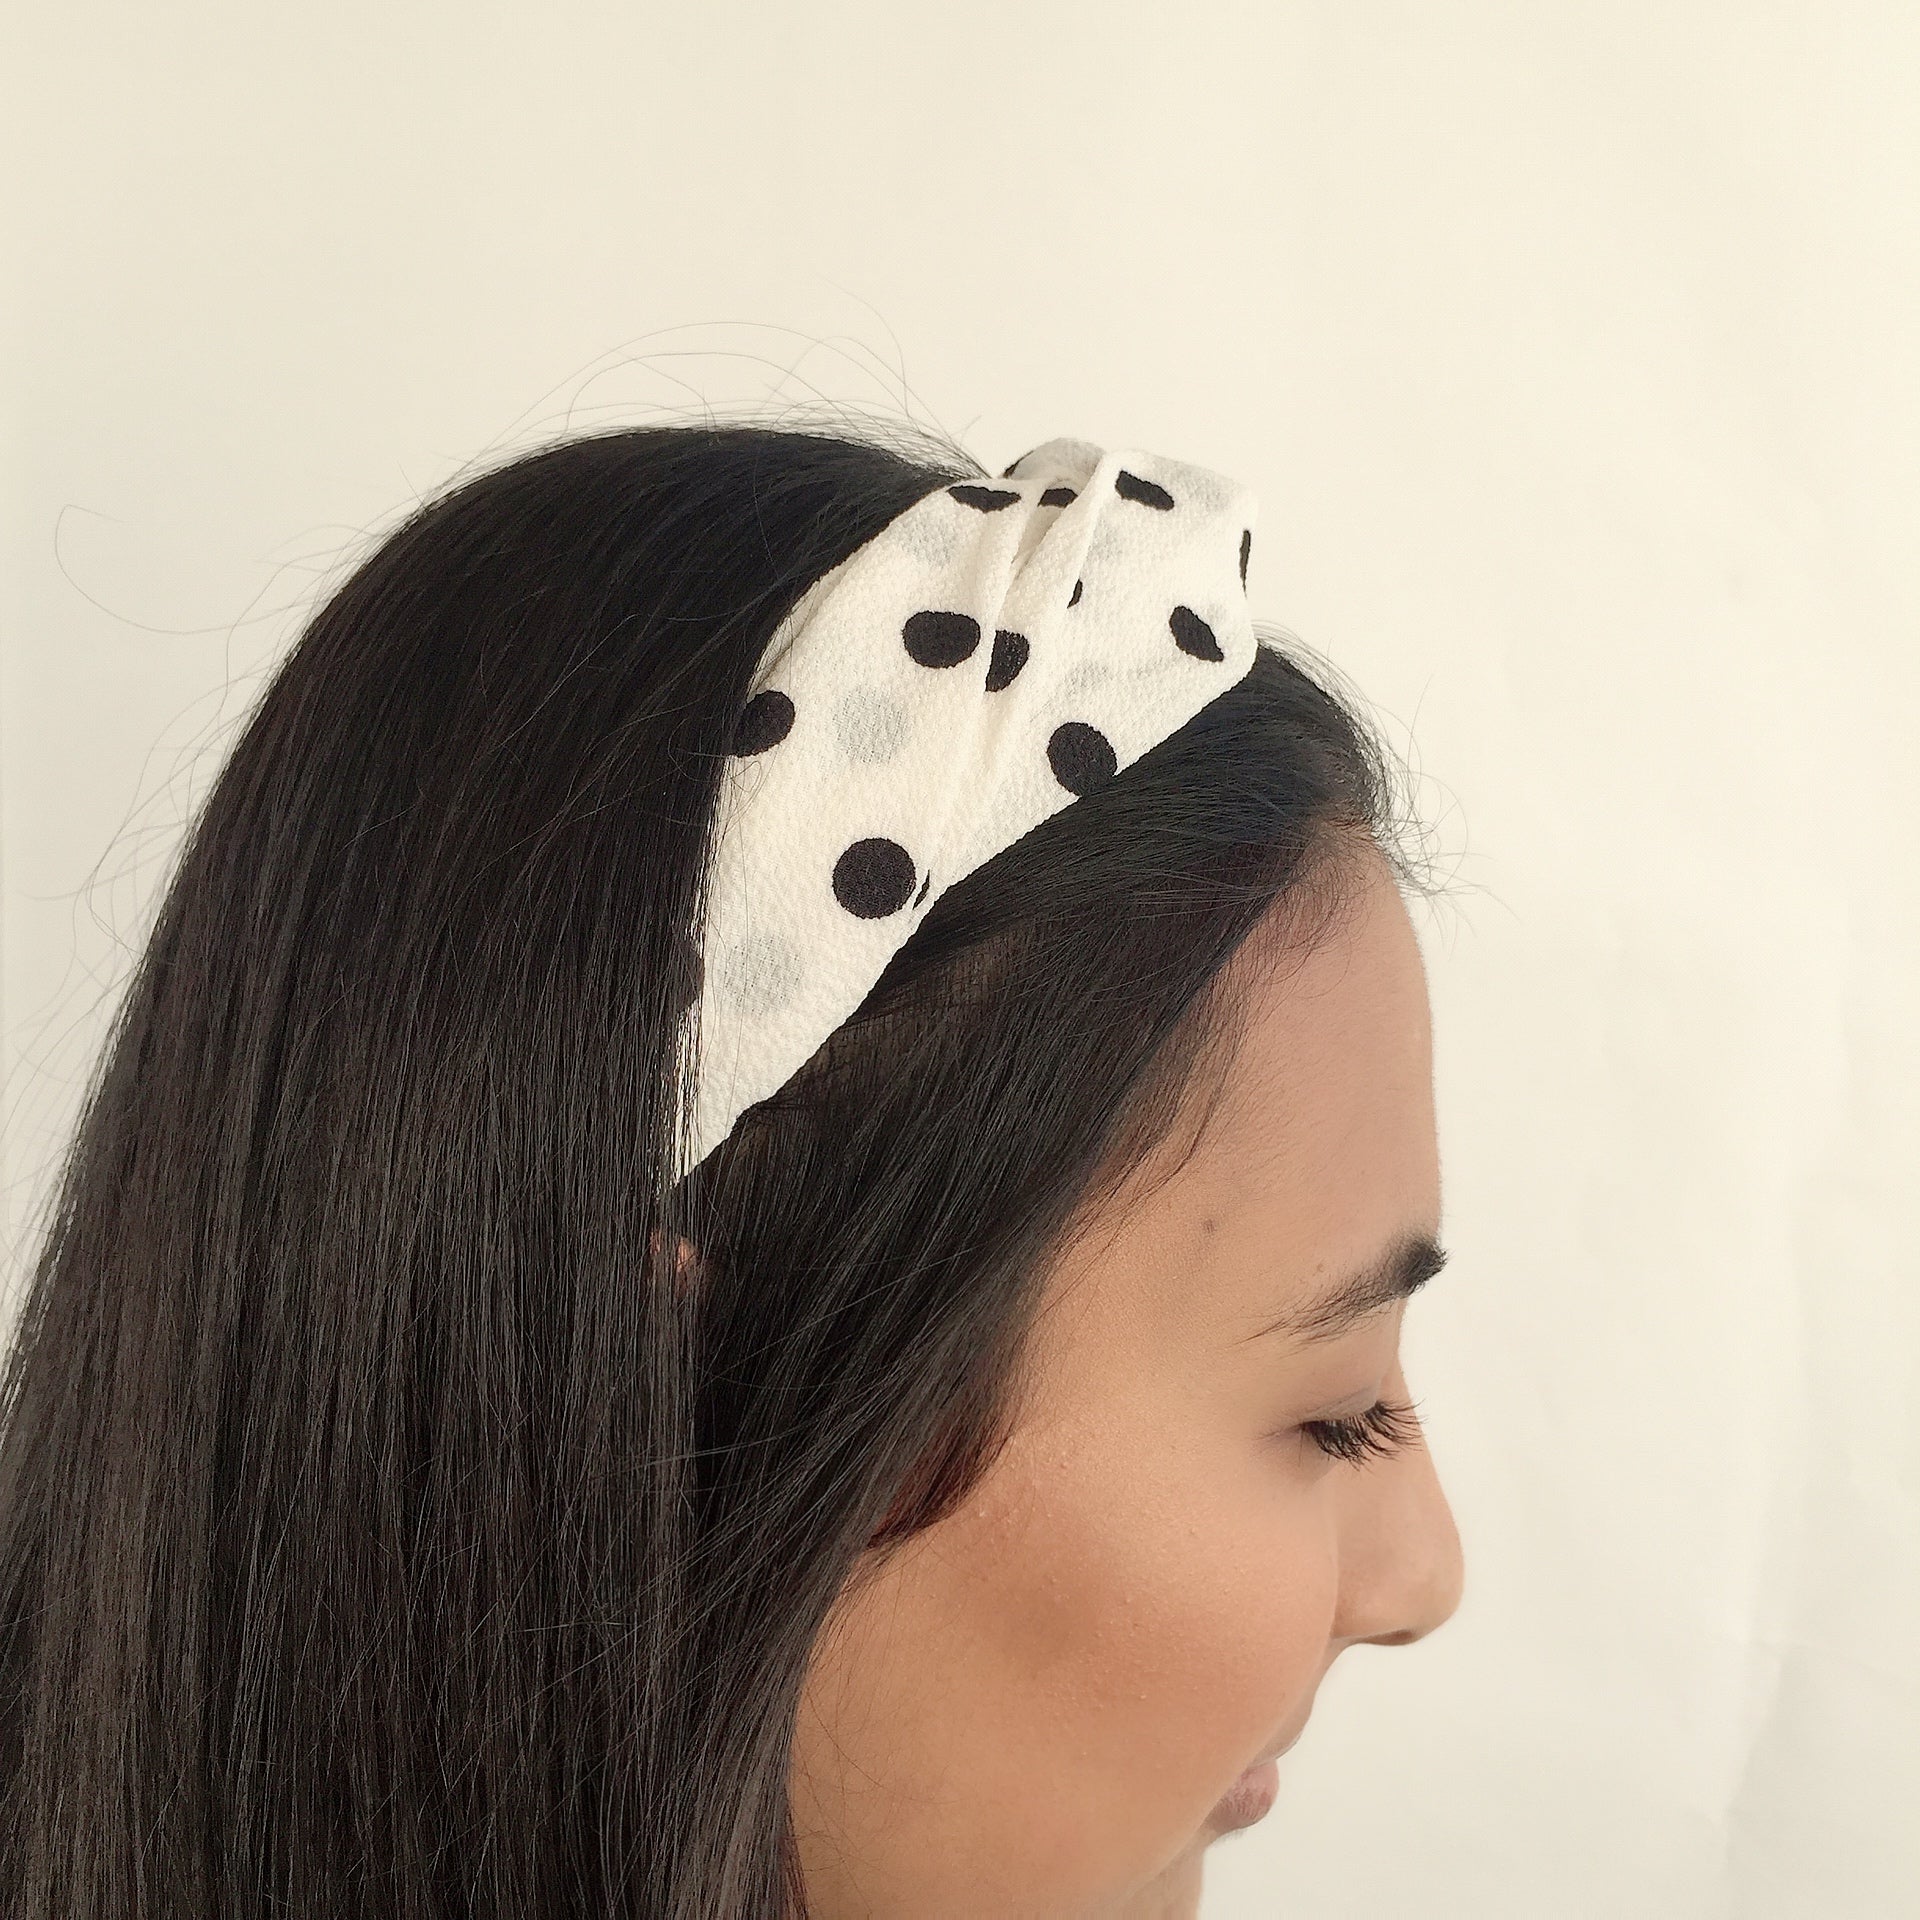 White and black polka dot headband (not an Alice Band)